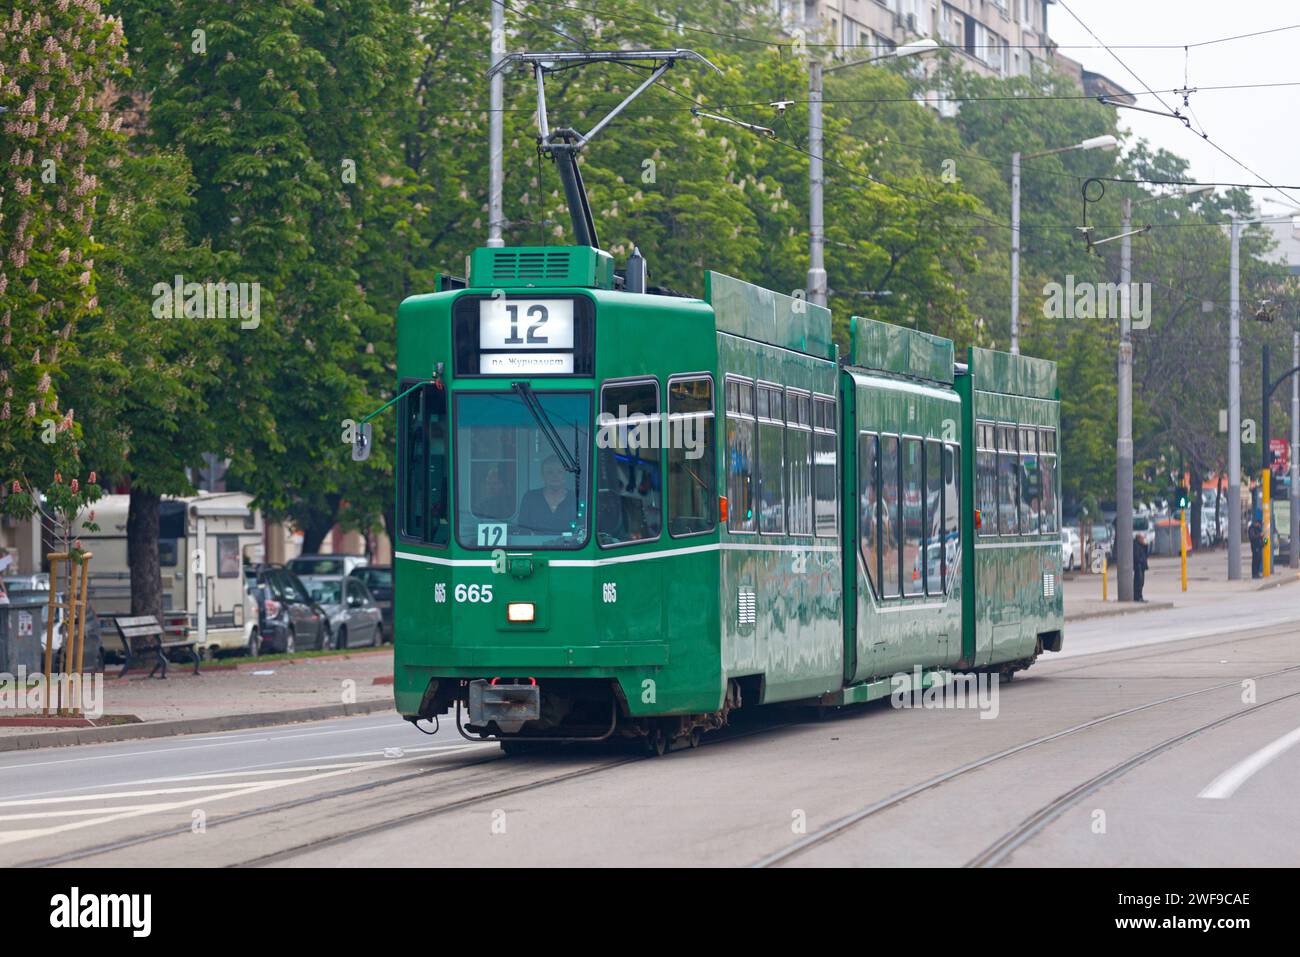 Sofia, Bulgaria - May 18 2019: The Sofia tram network is a main public transportation facility in the Bulgarian capital city. Stock Photo